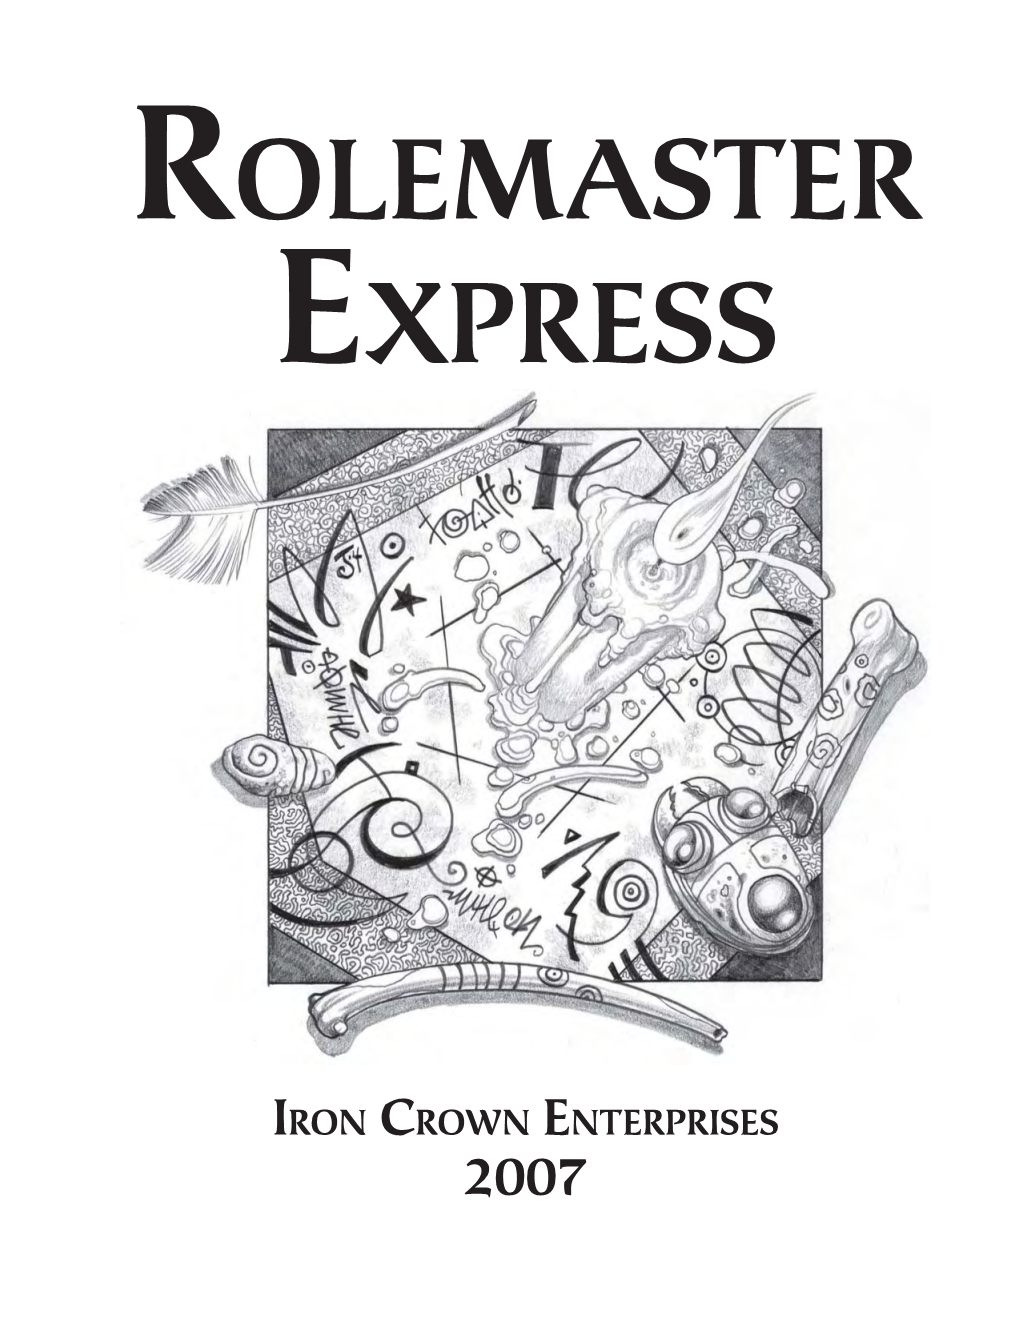 Rolemaster Express